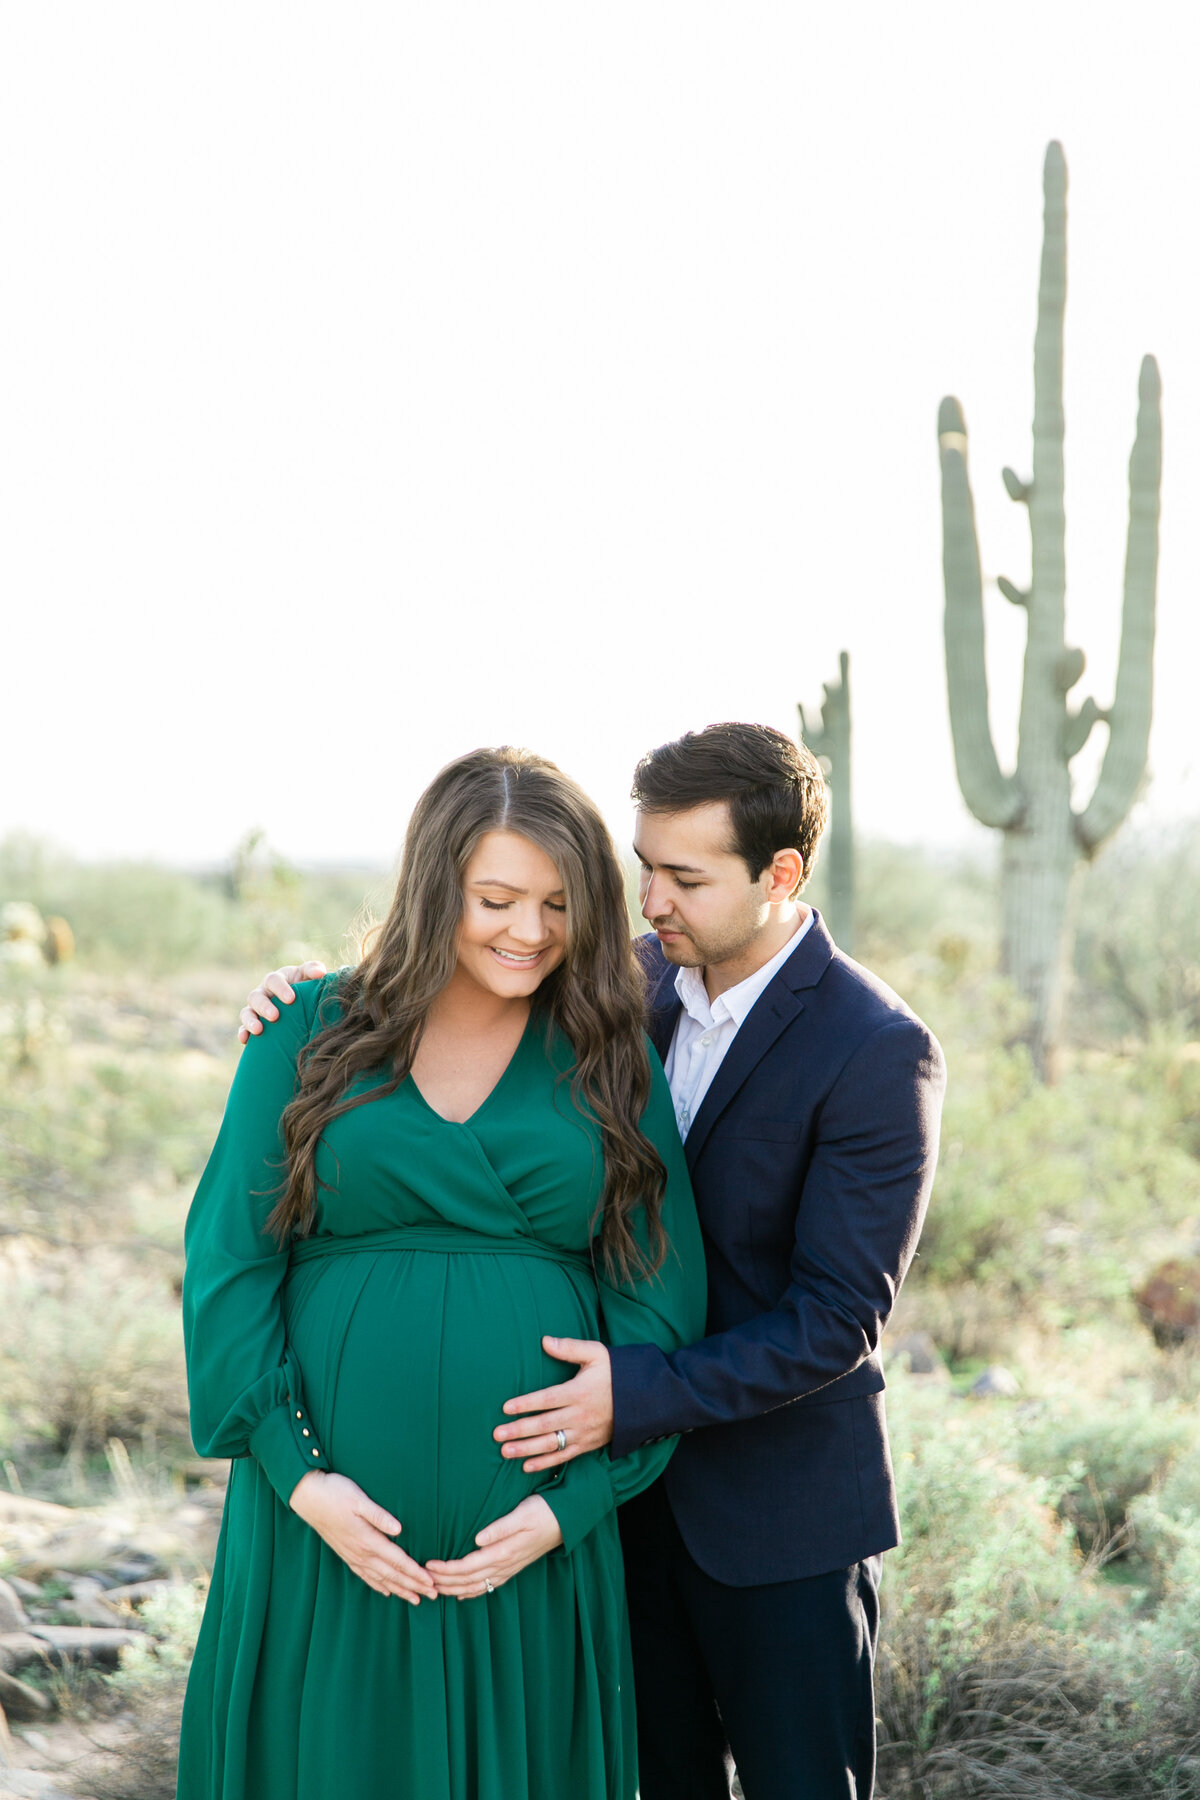 Karlie Colleen Photography - Scottsdale Arizona - Maternity Photos - Shelby & Cris-19